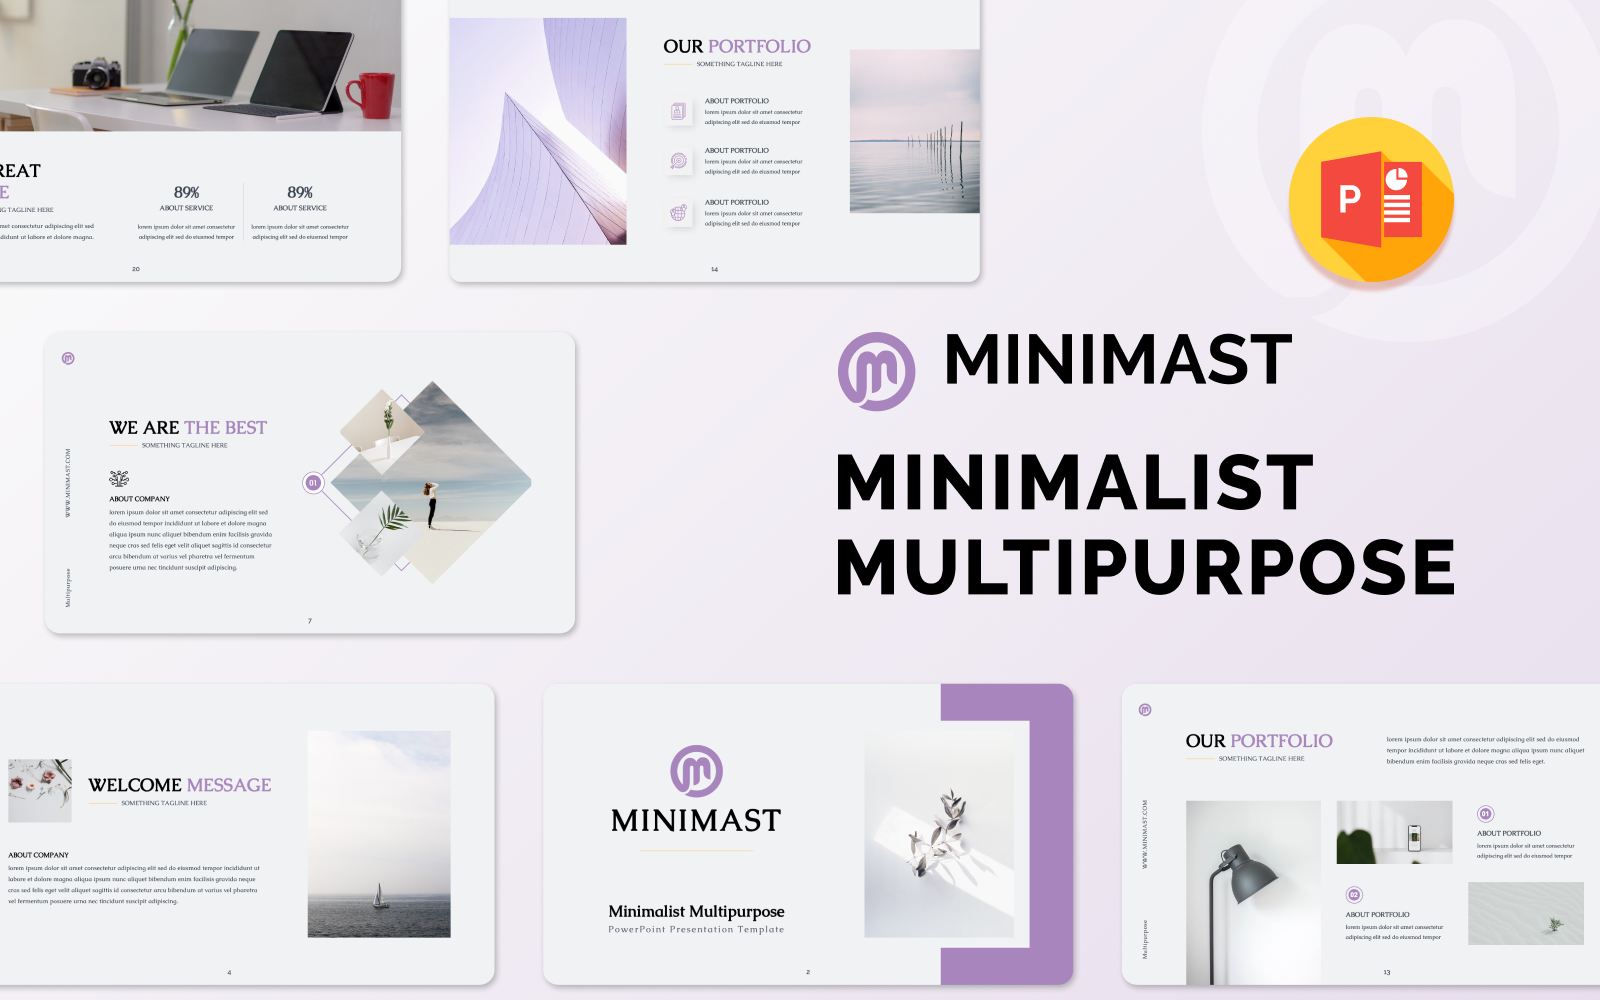 Minimast – Minimalist Multipurpose PowerPoint Presentation Template